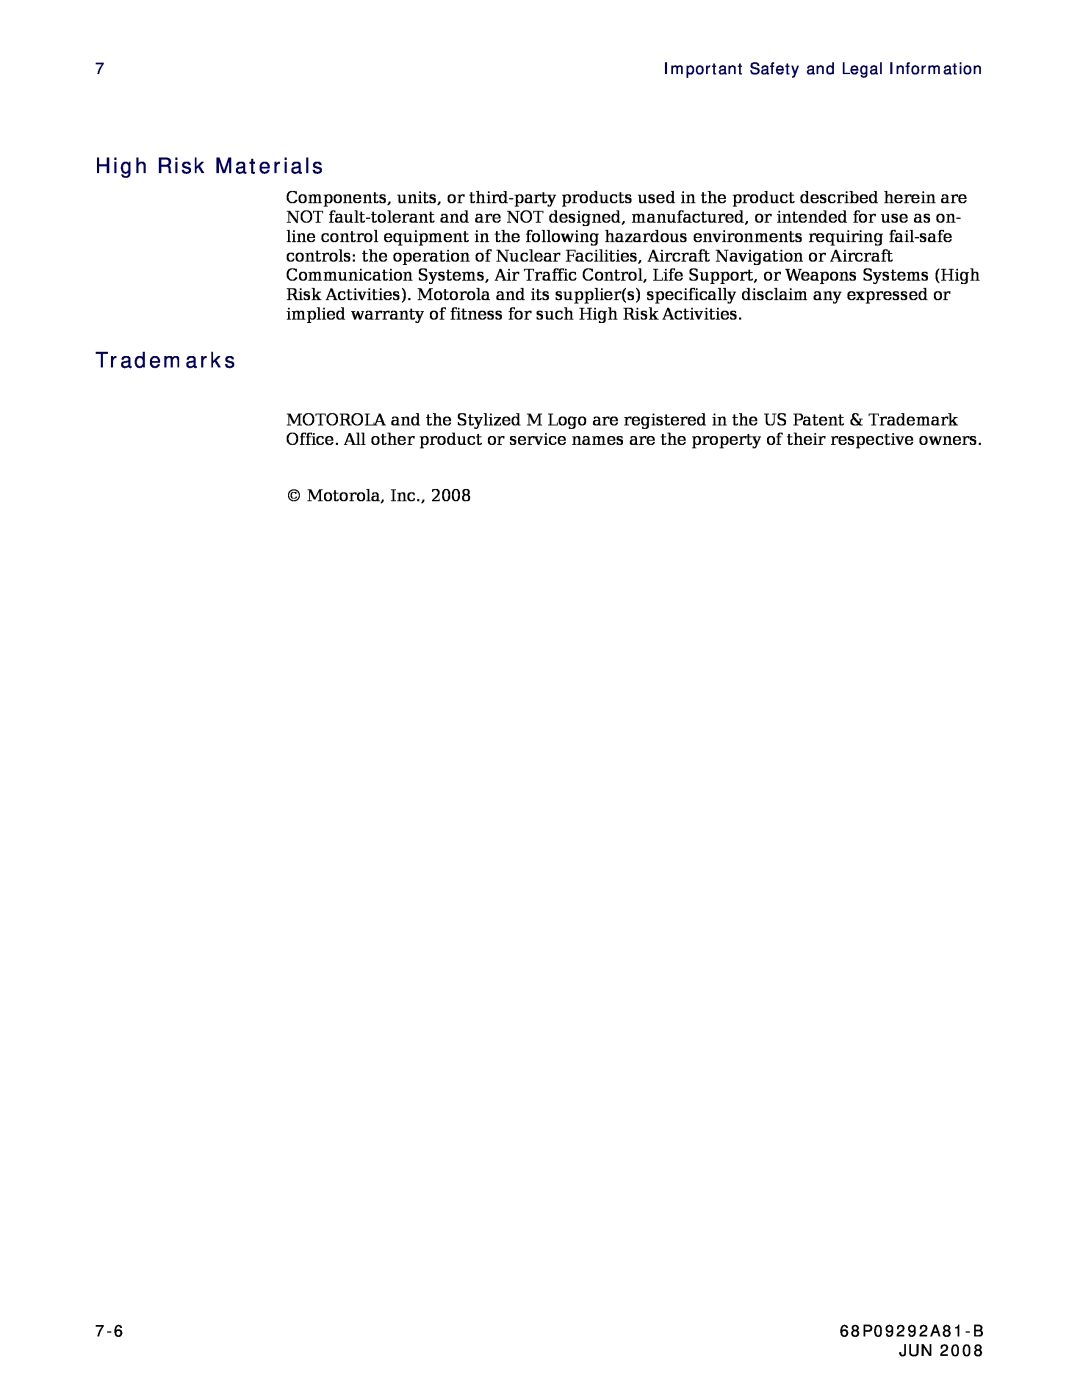 Motorola CPEI 750 manual High Risk Materials, Trademarks, 68P09292A81-B 